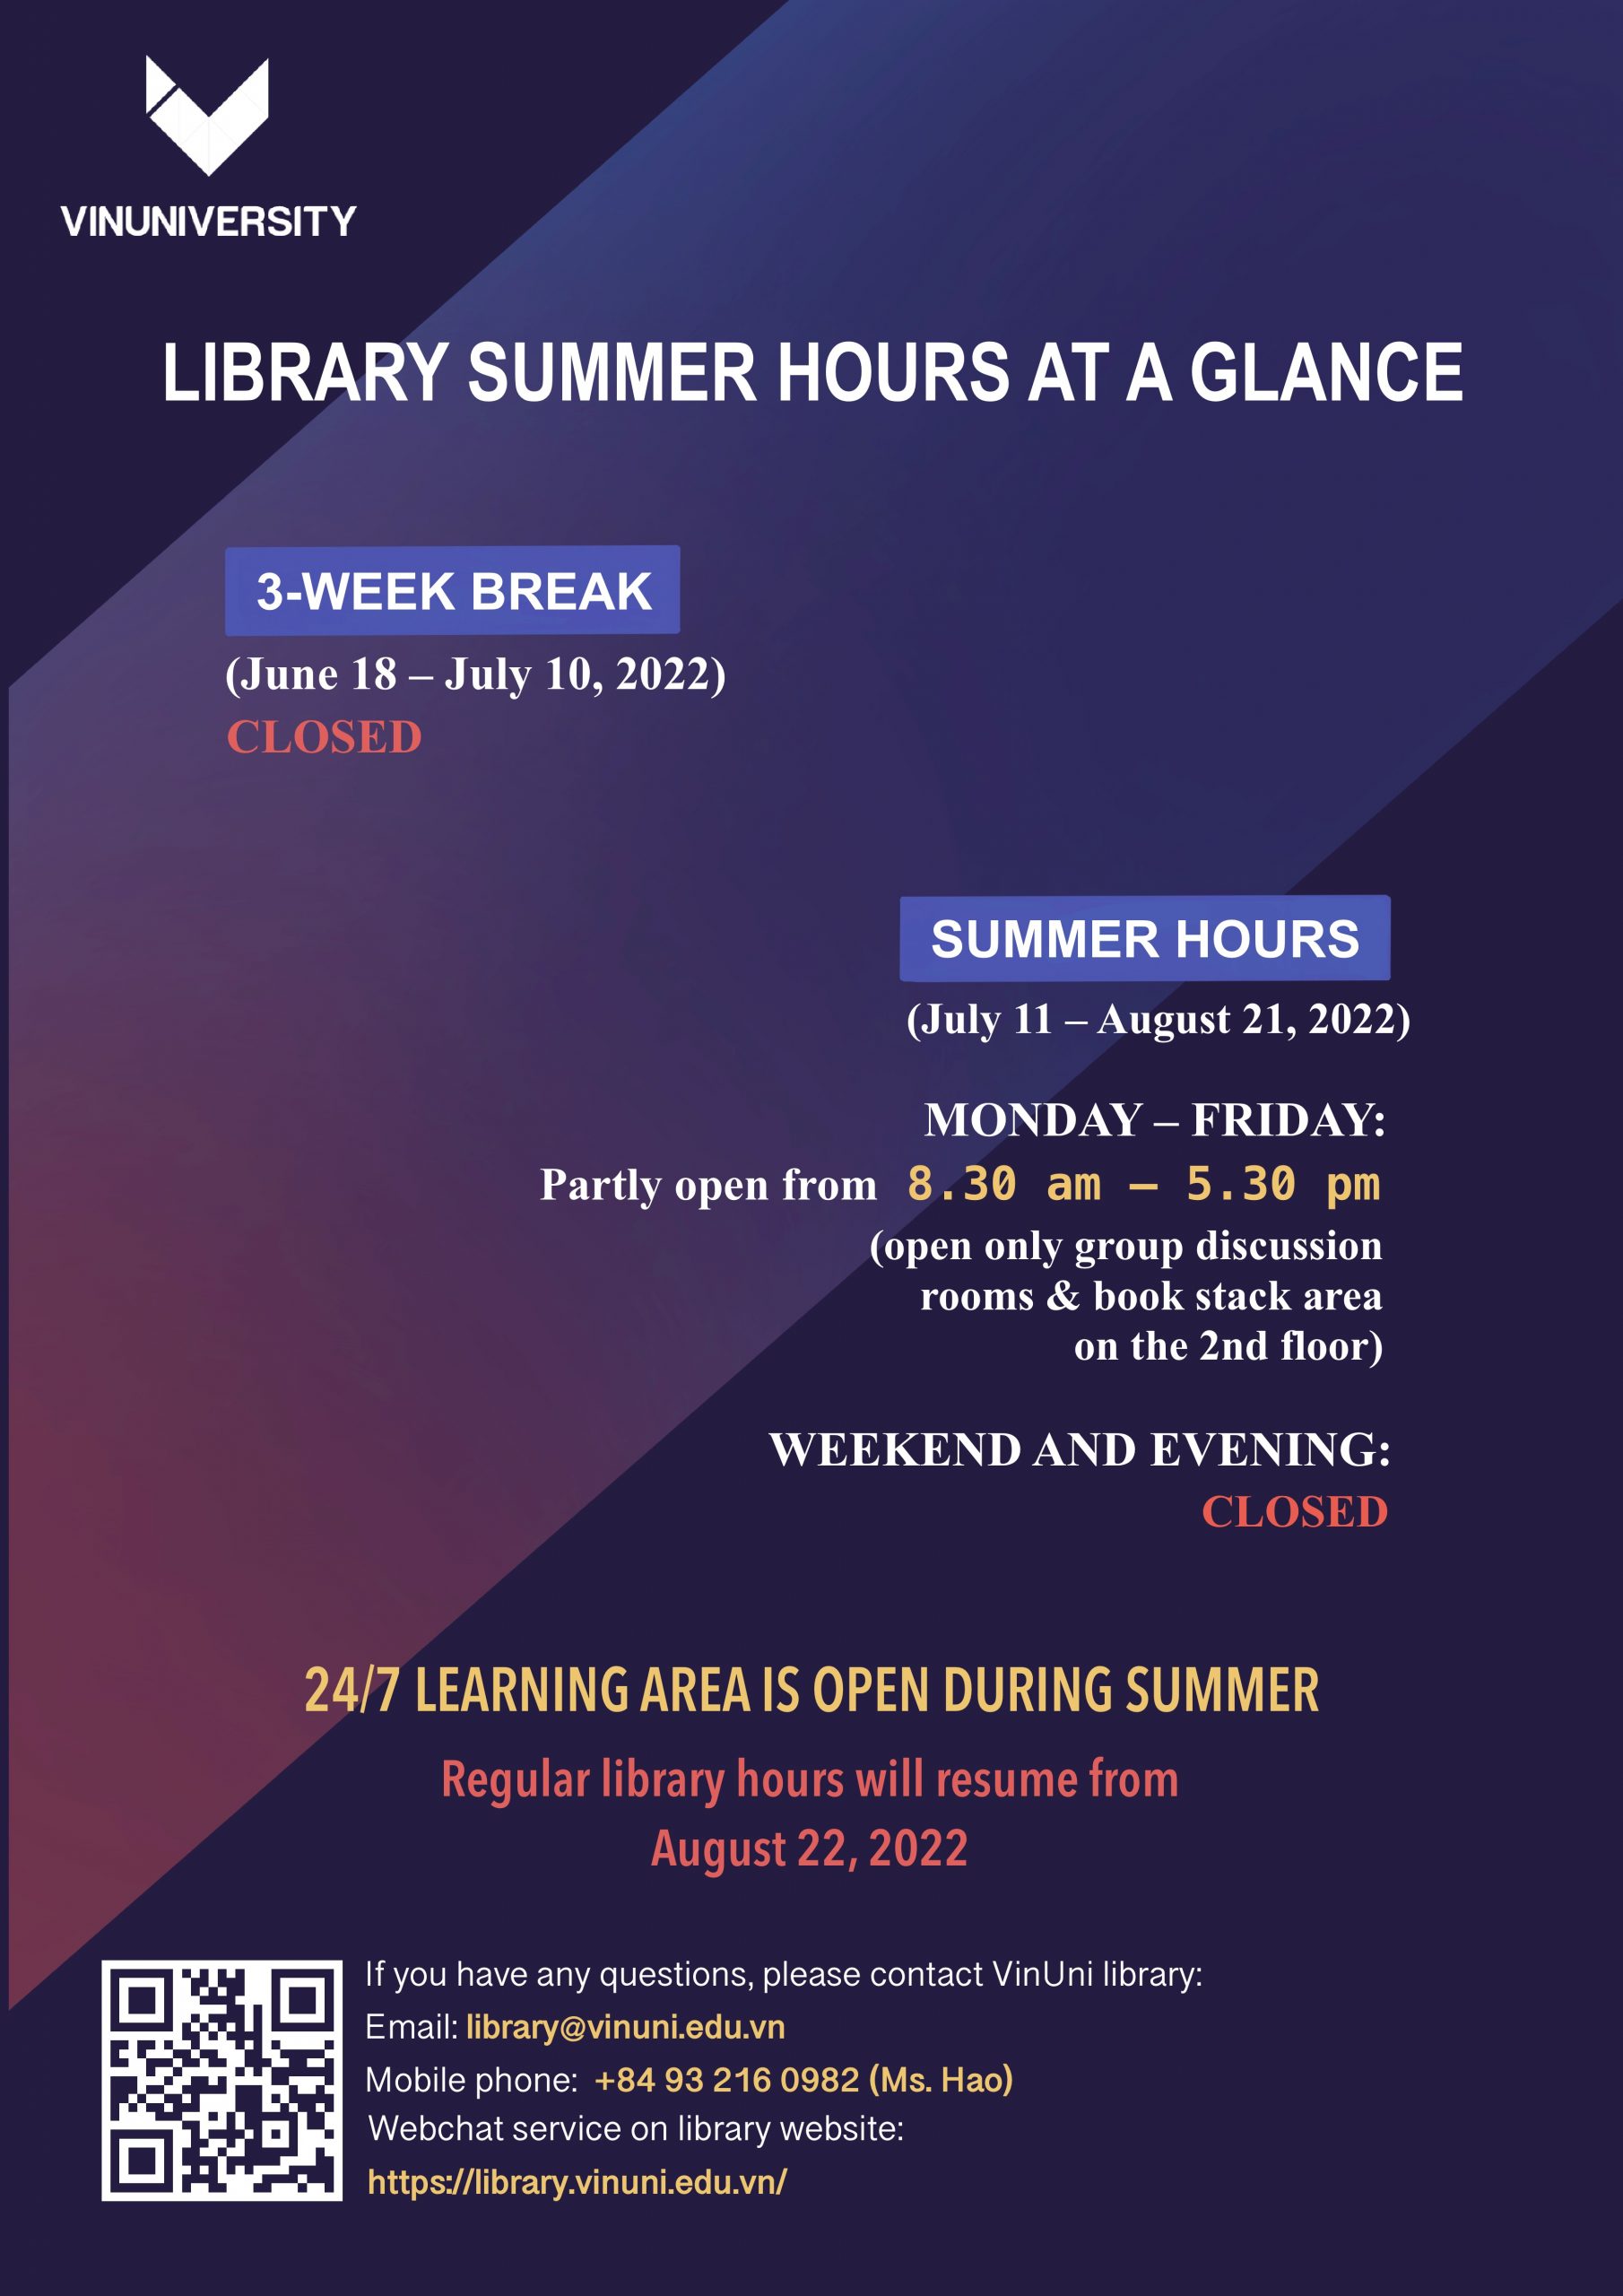 https://library.vinuni.edu.vn/newss/library-summer-hours-at-a-glance/